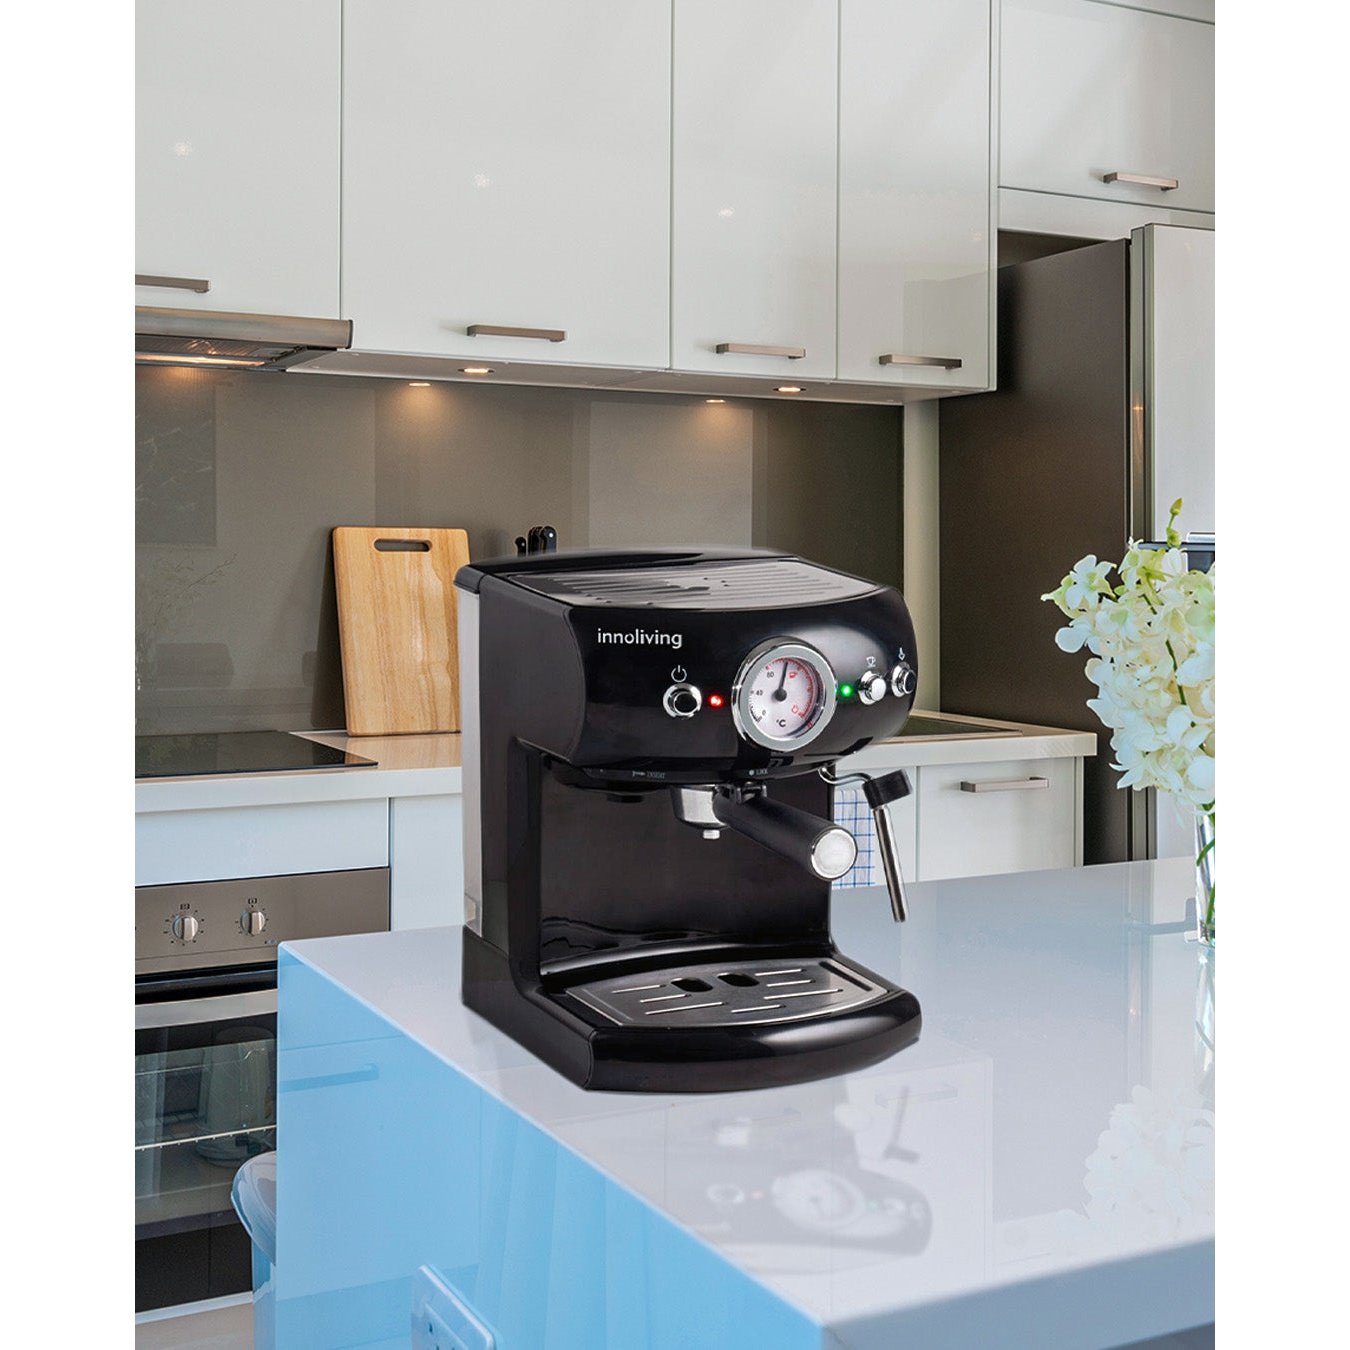 Macchina per caffè 4in1 multistandard espresso con lancia a vapore, INN-789 Innoliving